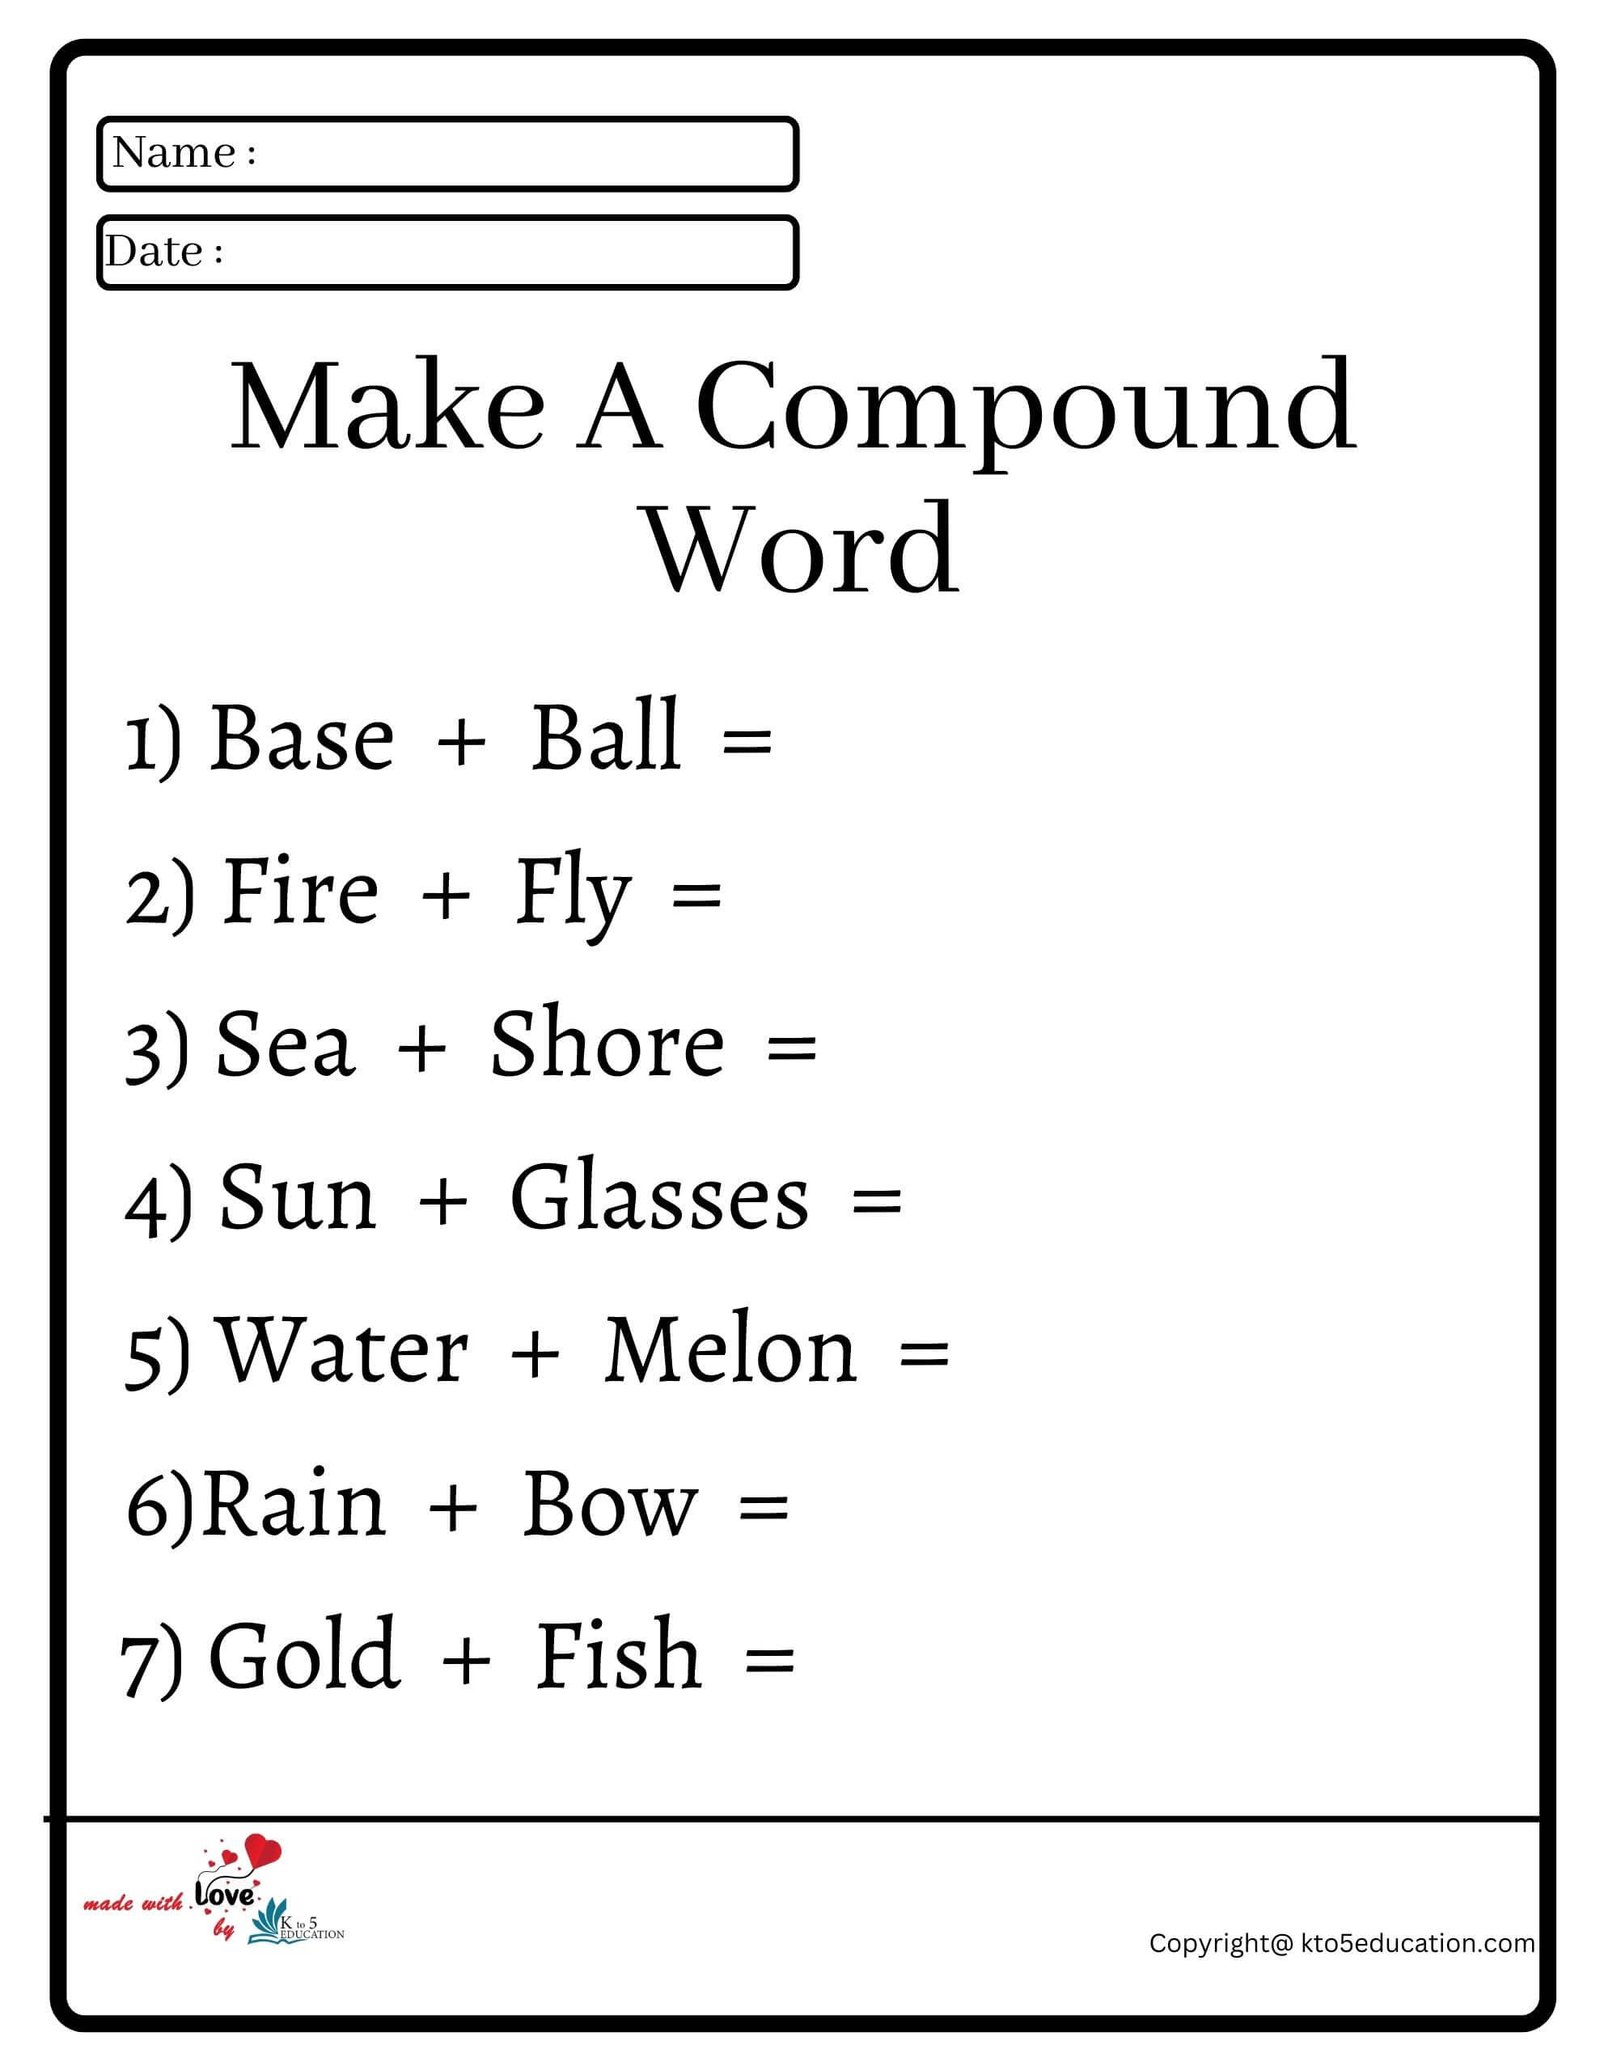 Make A Compound Word Worksheet 2